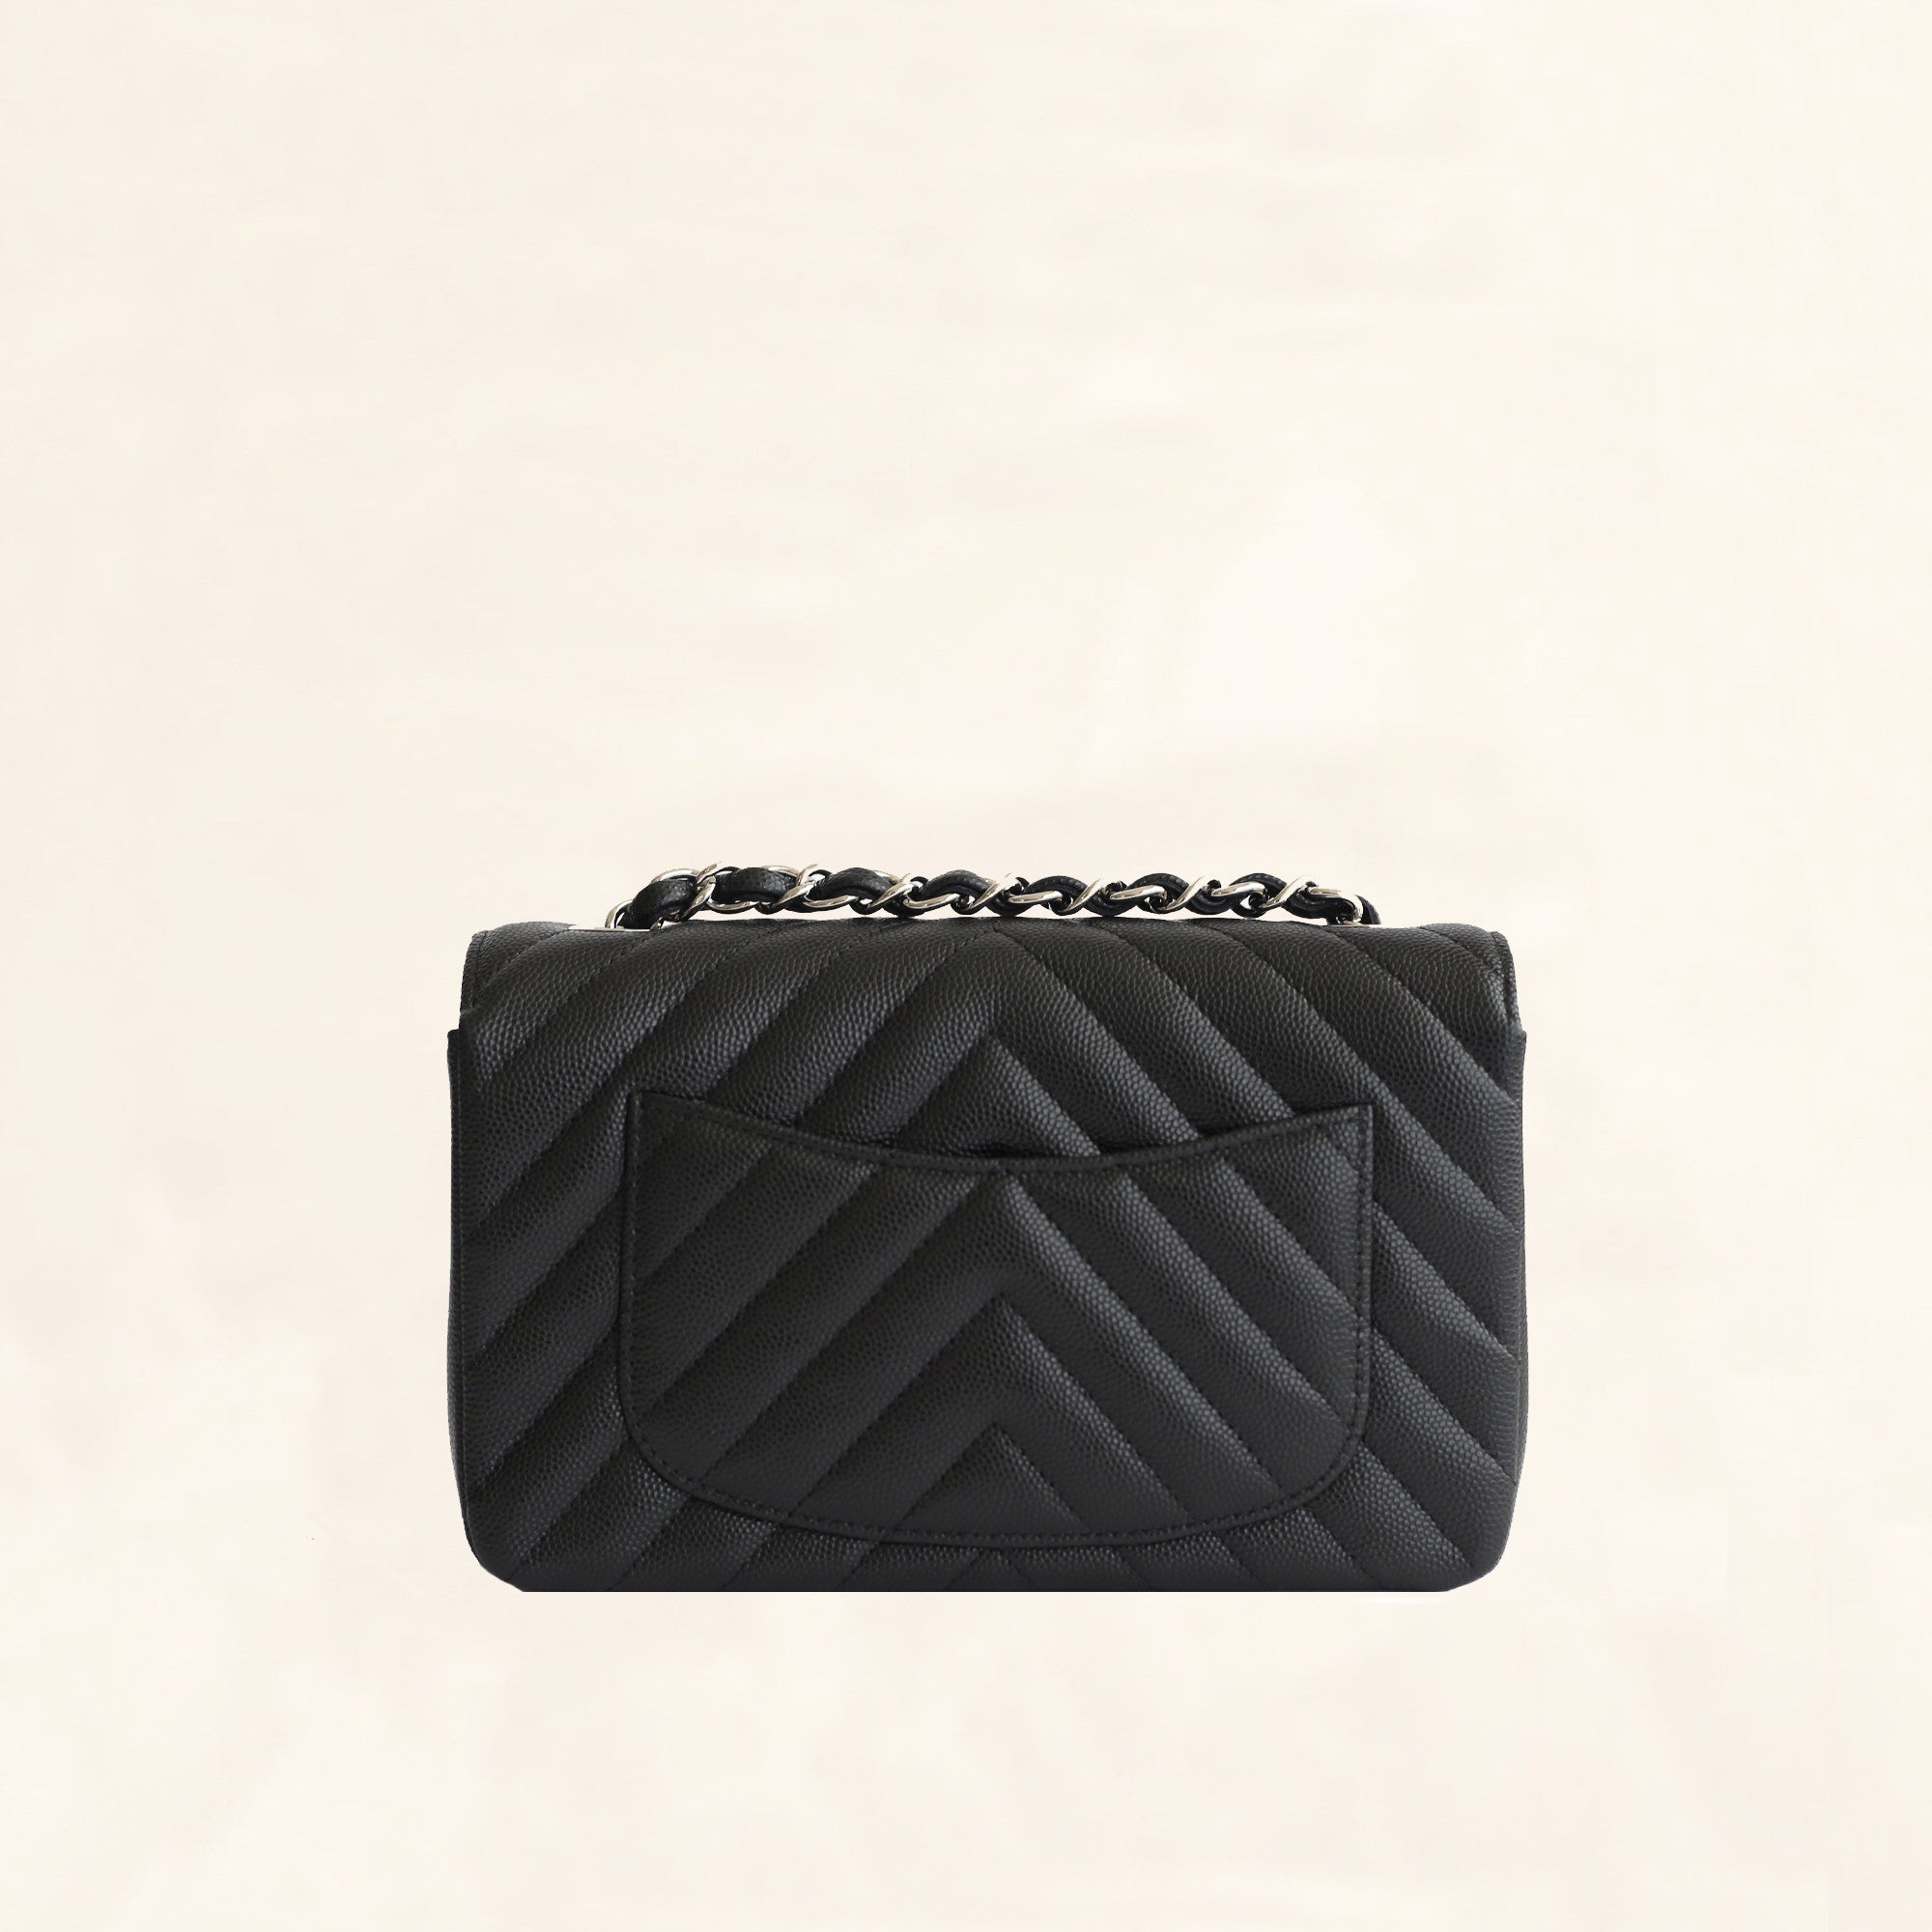 Chanel Black Caviar Square Mini Classic Shoulder/Crossbody Bag